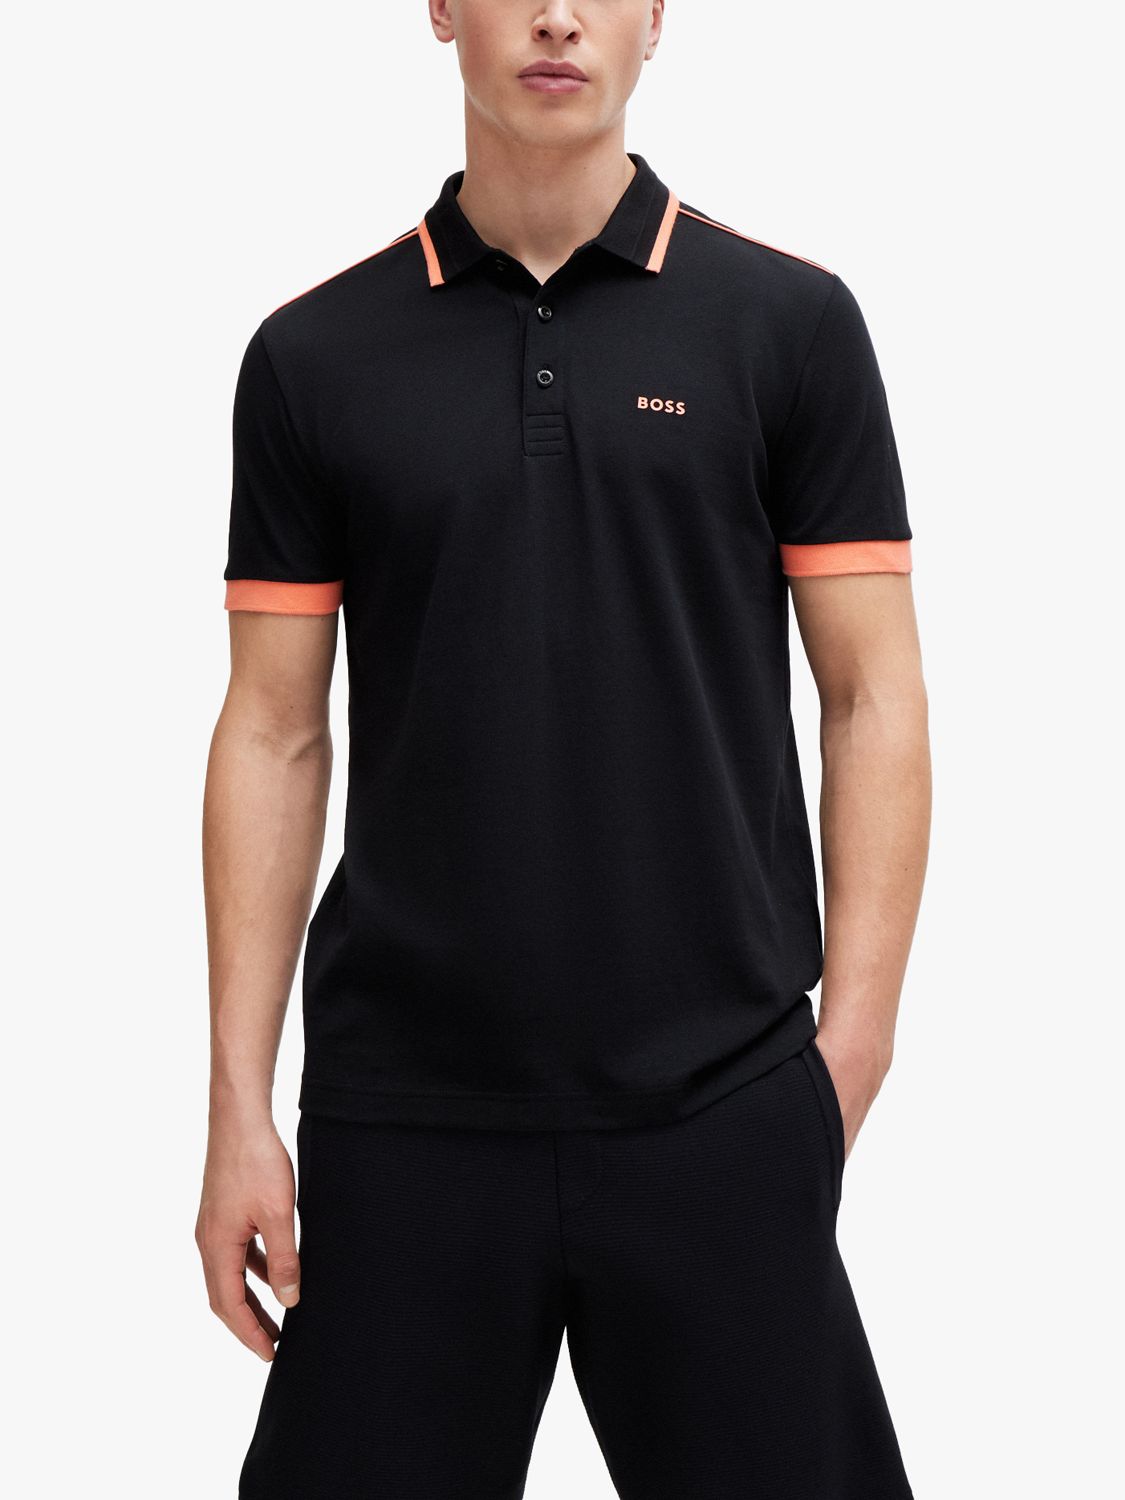 BOSS Paddy Sporty Polo Shirt, Black, XXXL